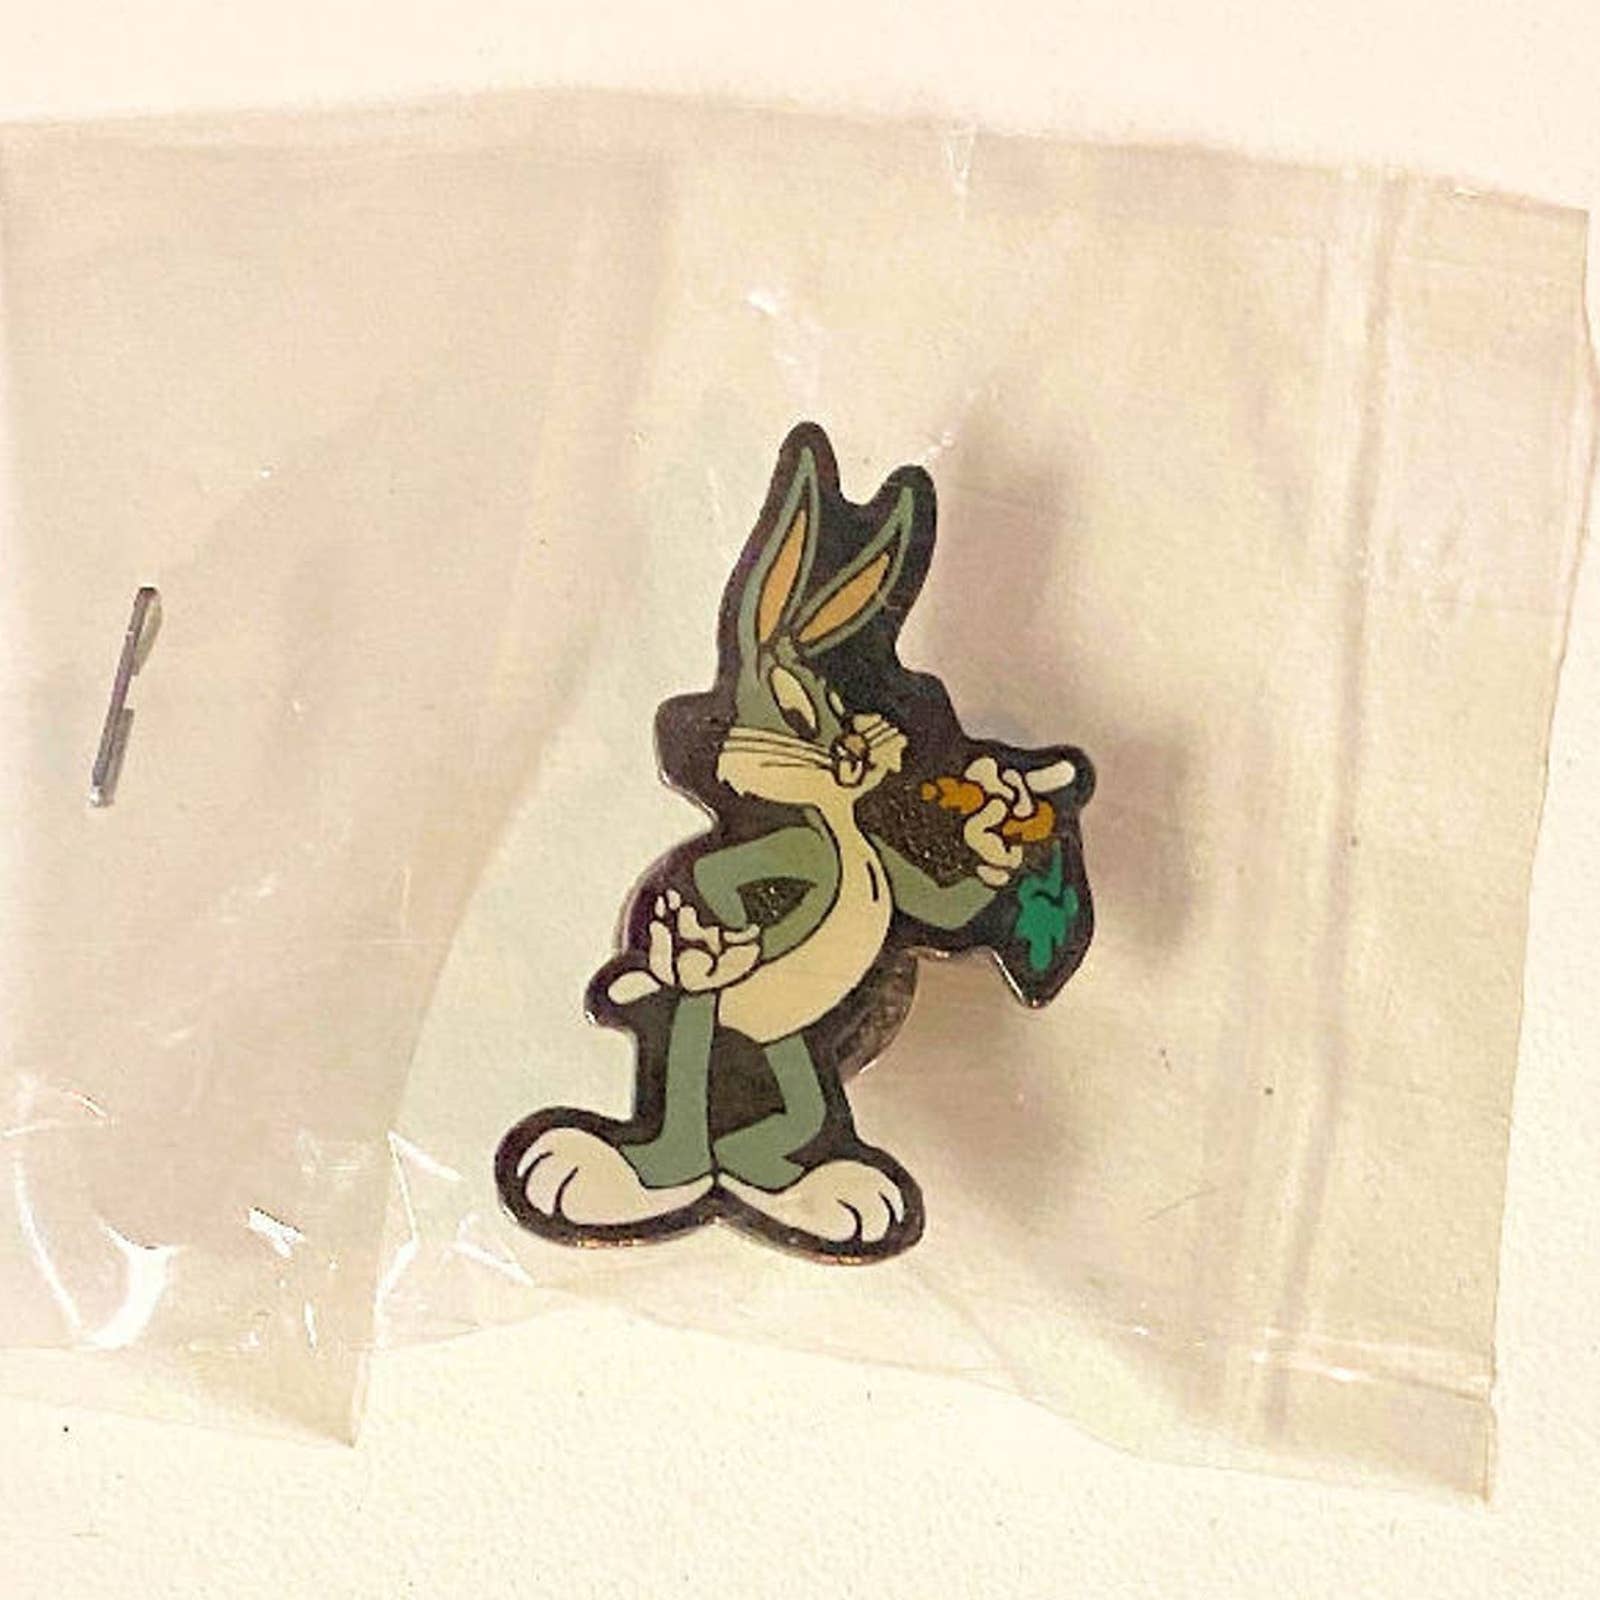 Bugs Bunny Enamel Pin Back Lapel Tie 1997 Warner Bros Carrot Vintage Pinback MIP